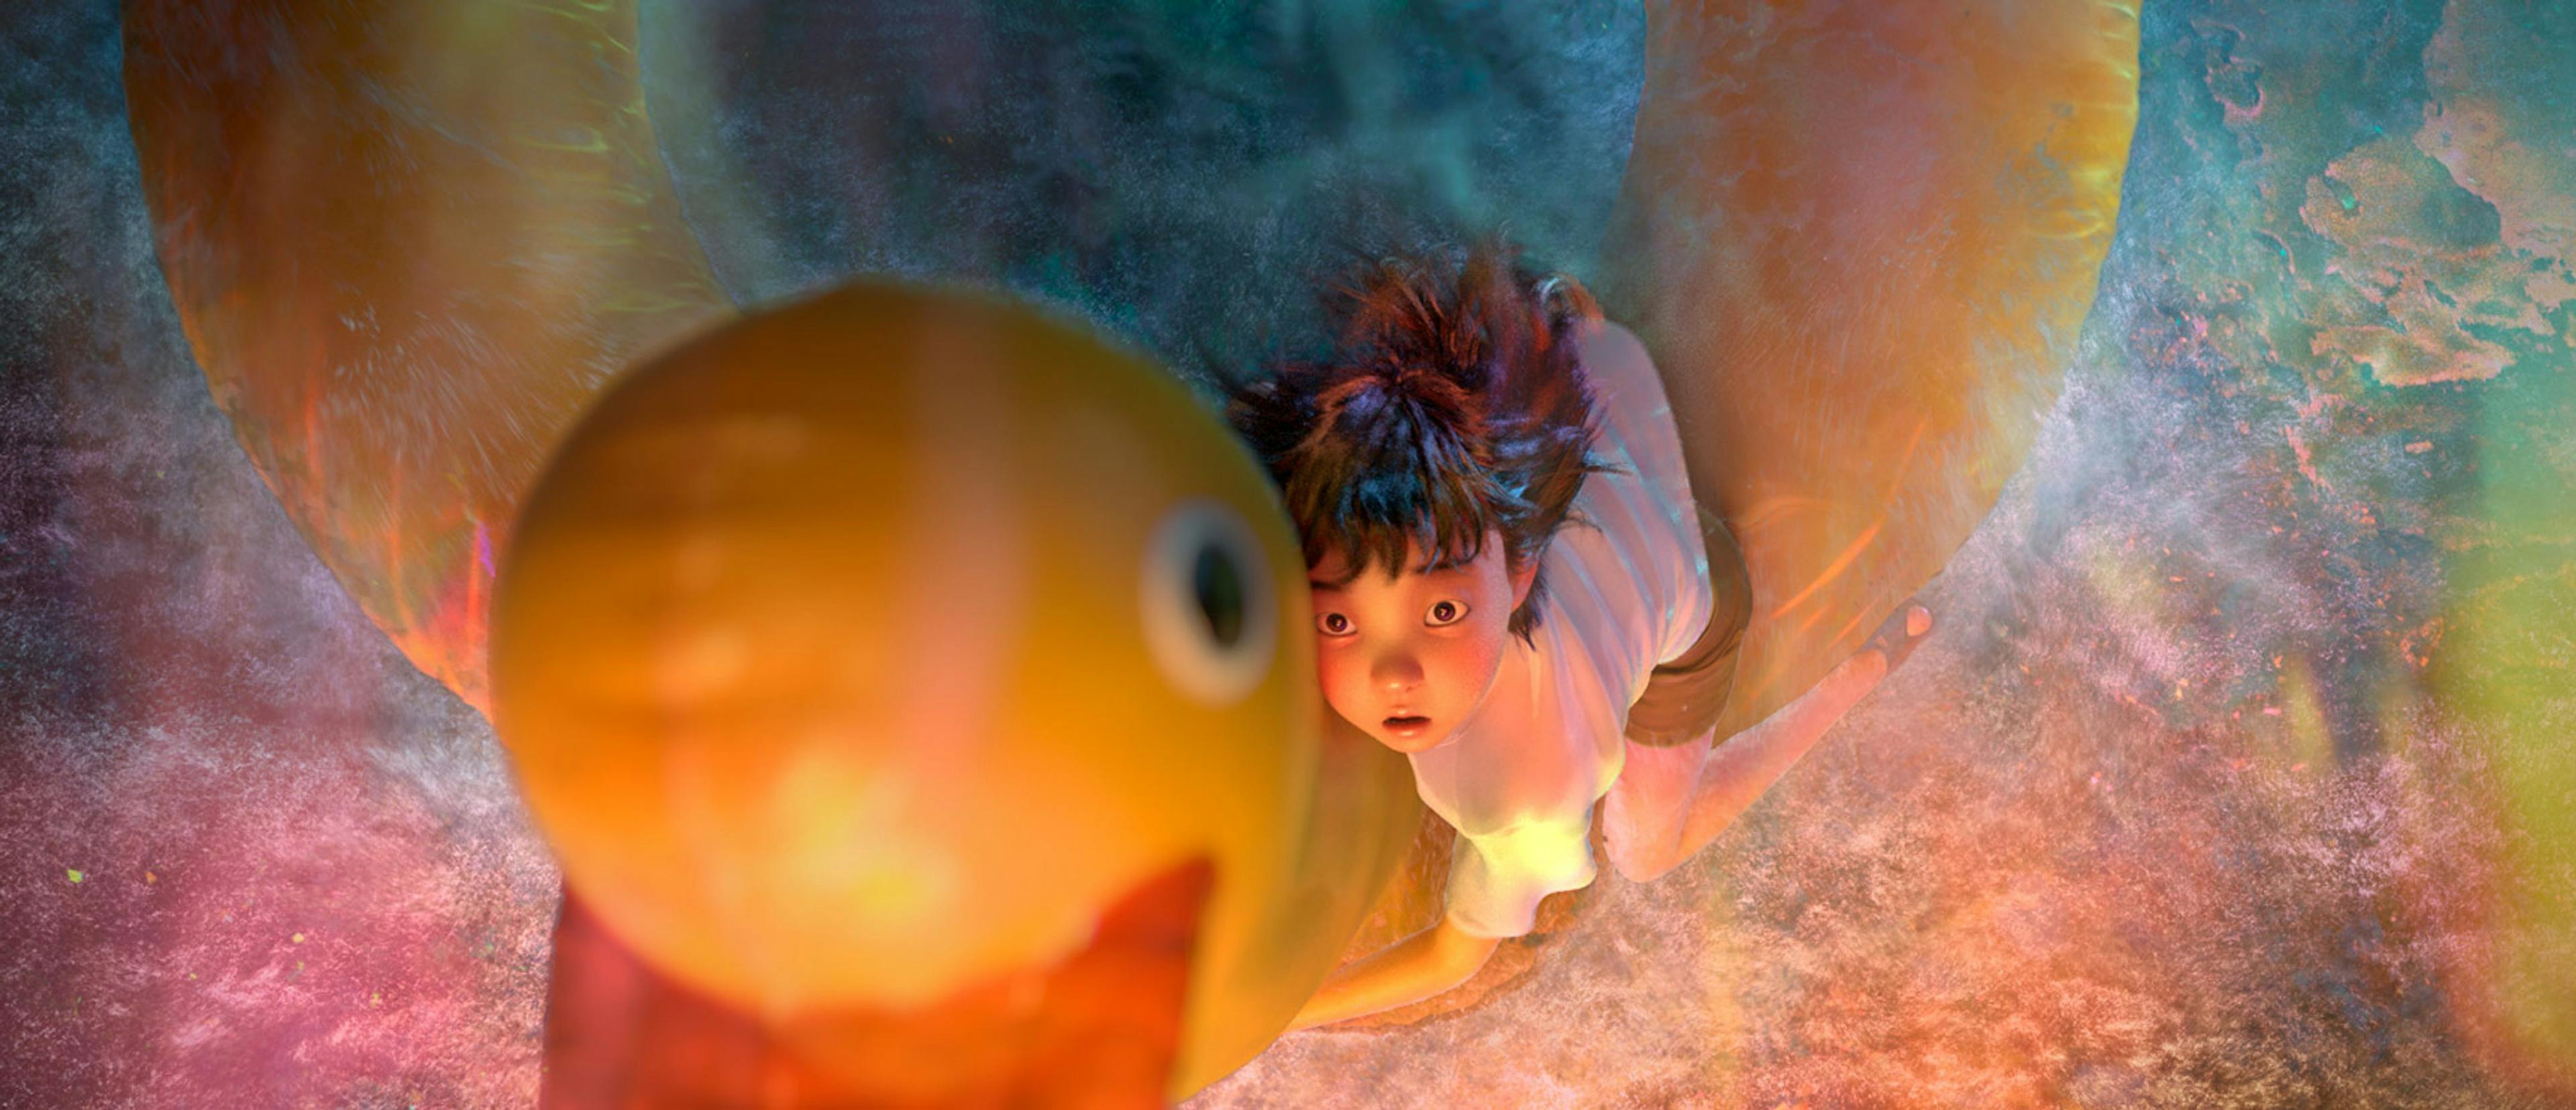 Fotograma de la película de animación china 'Deep sea. Viaje a las profundidades', de Tian Xiao Peng  